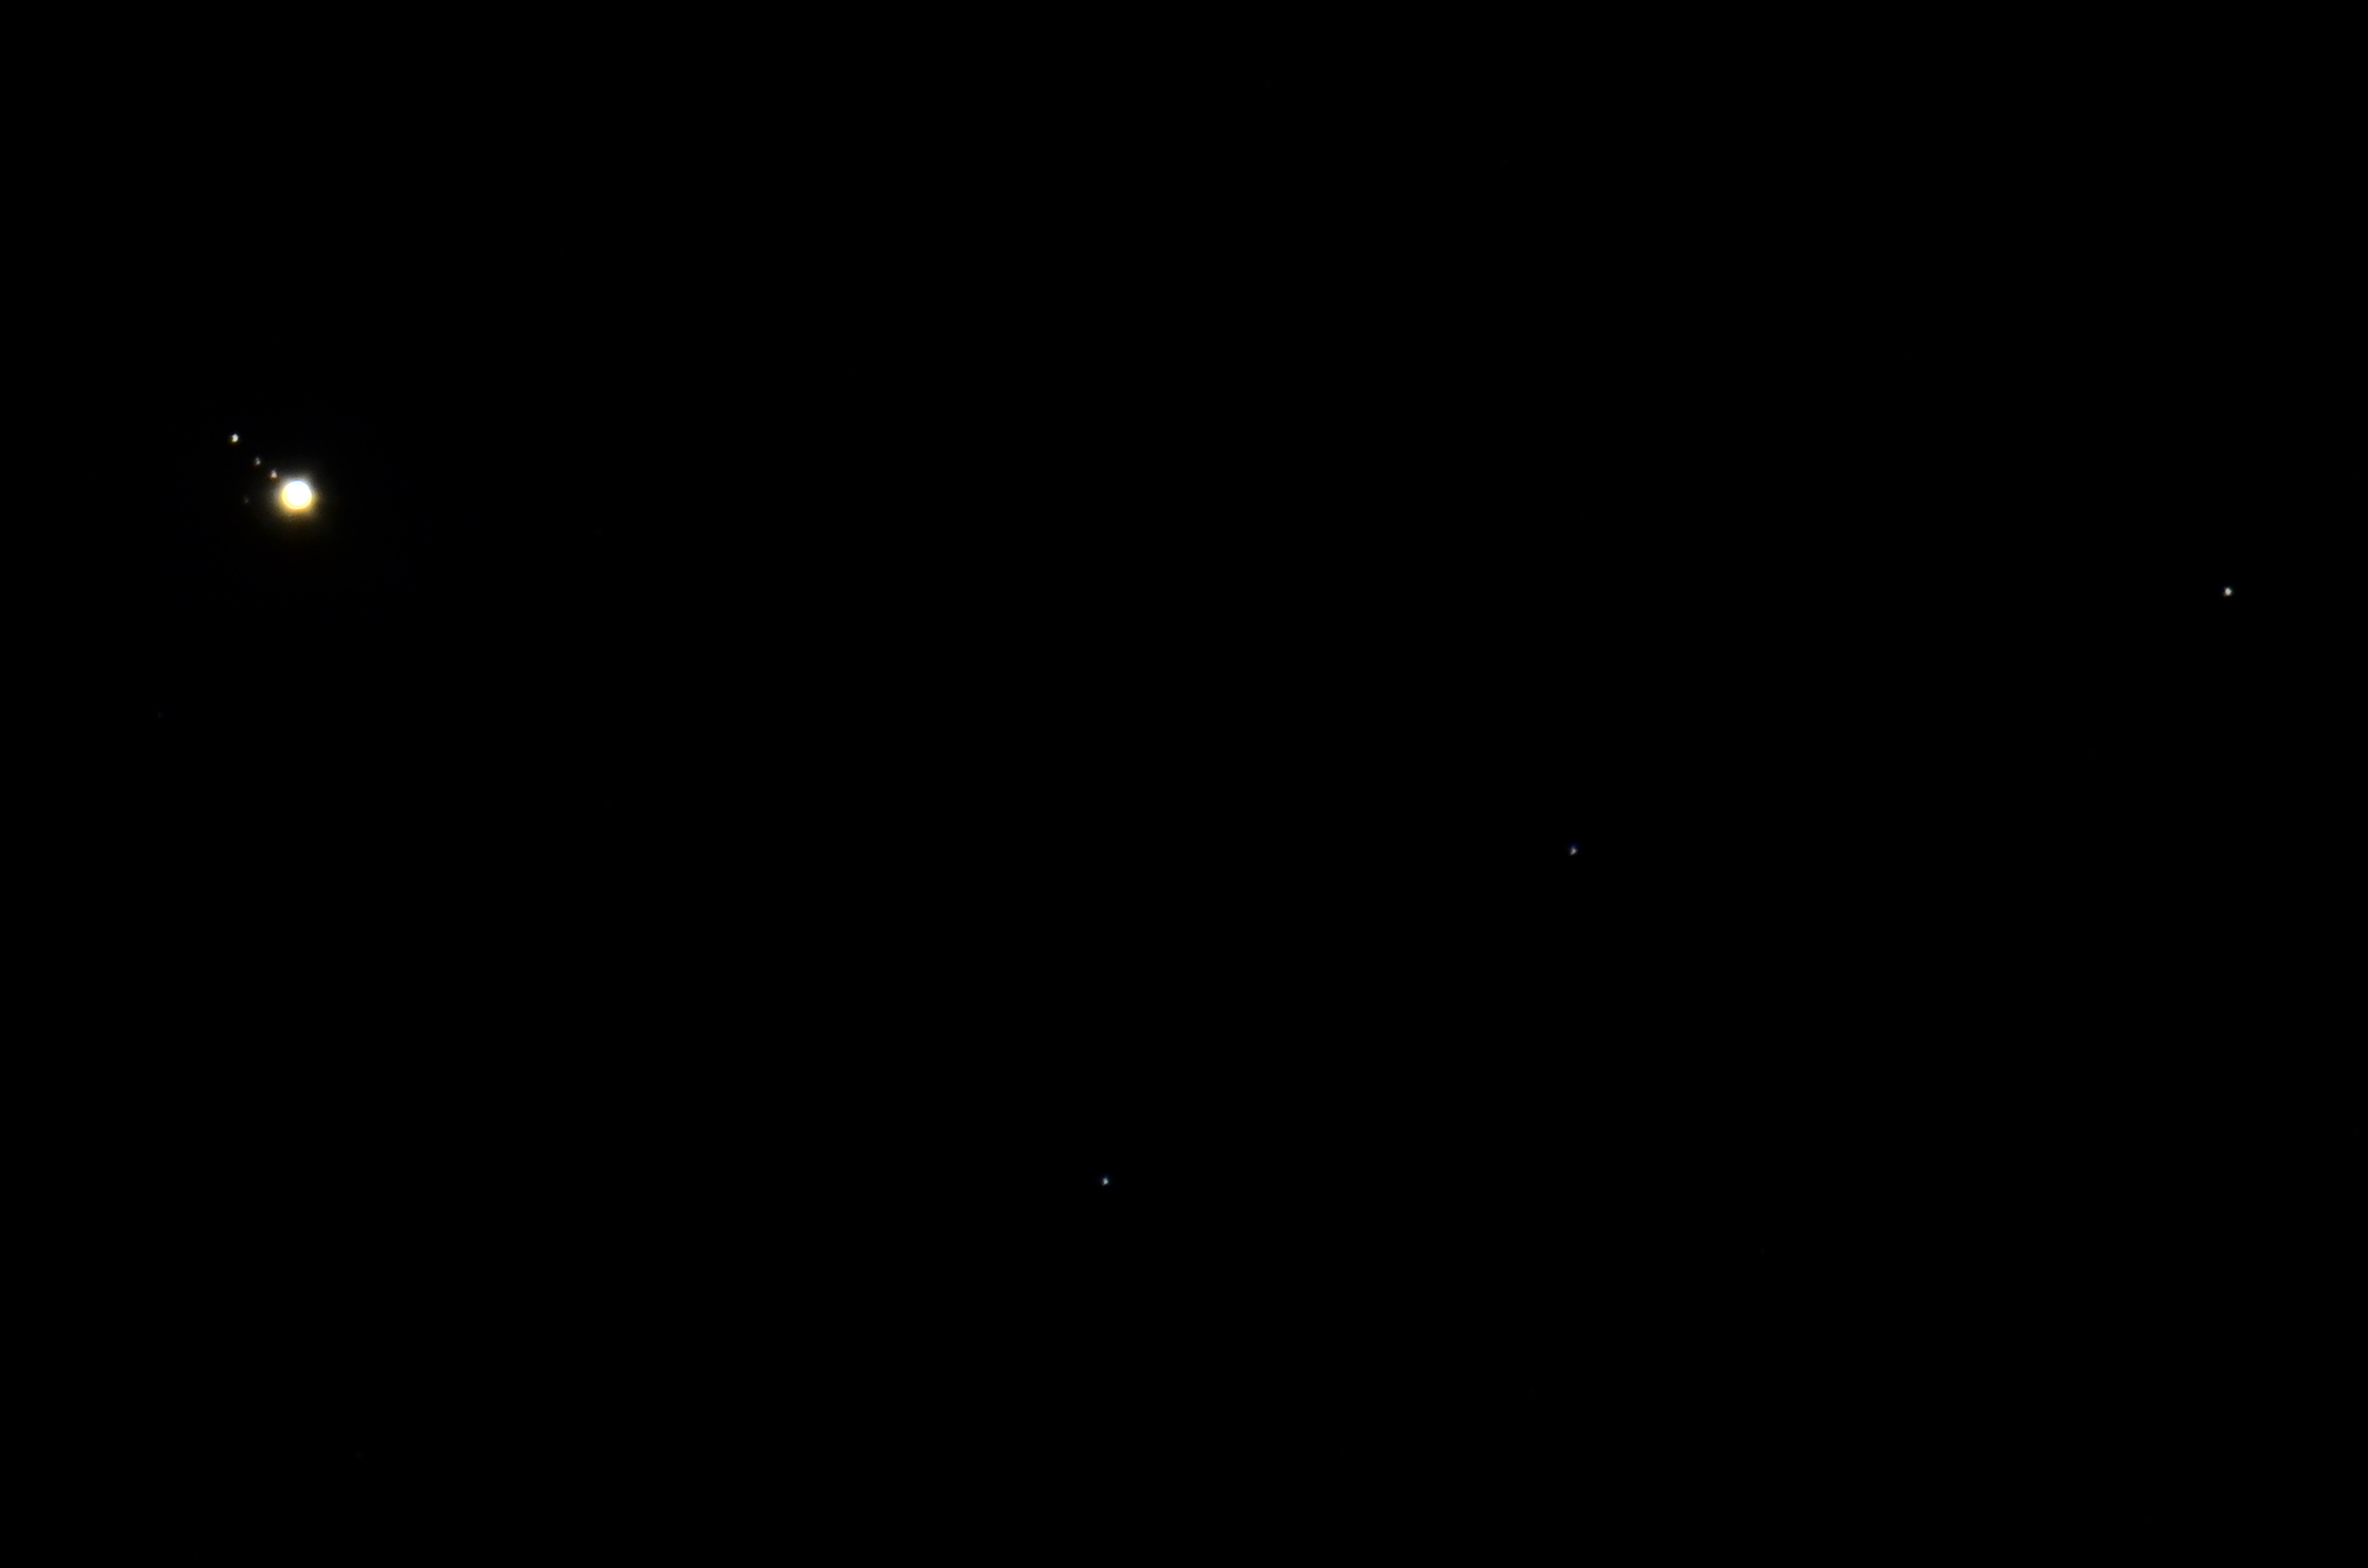 Photograph of Jupiter and its moons